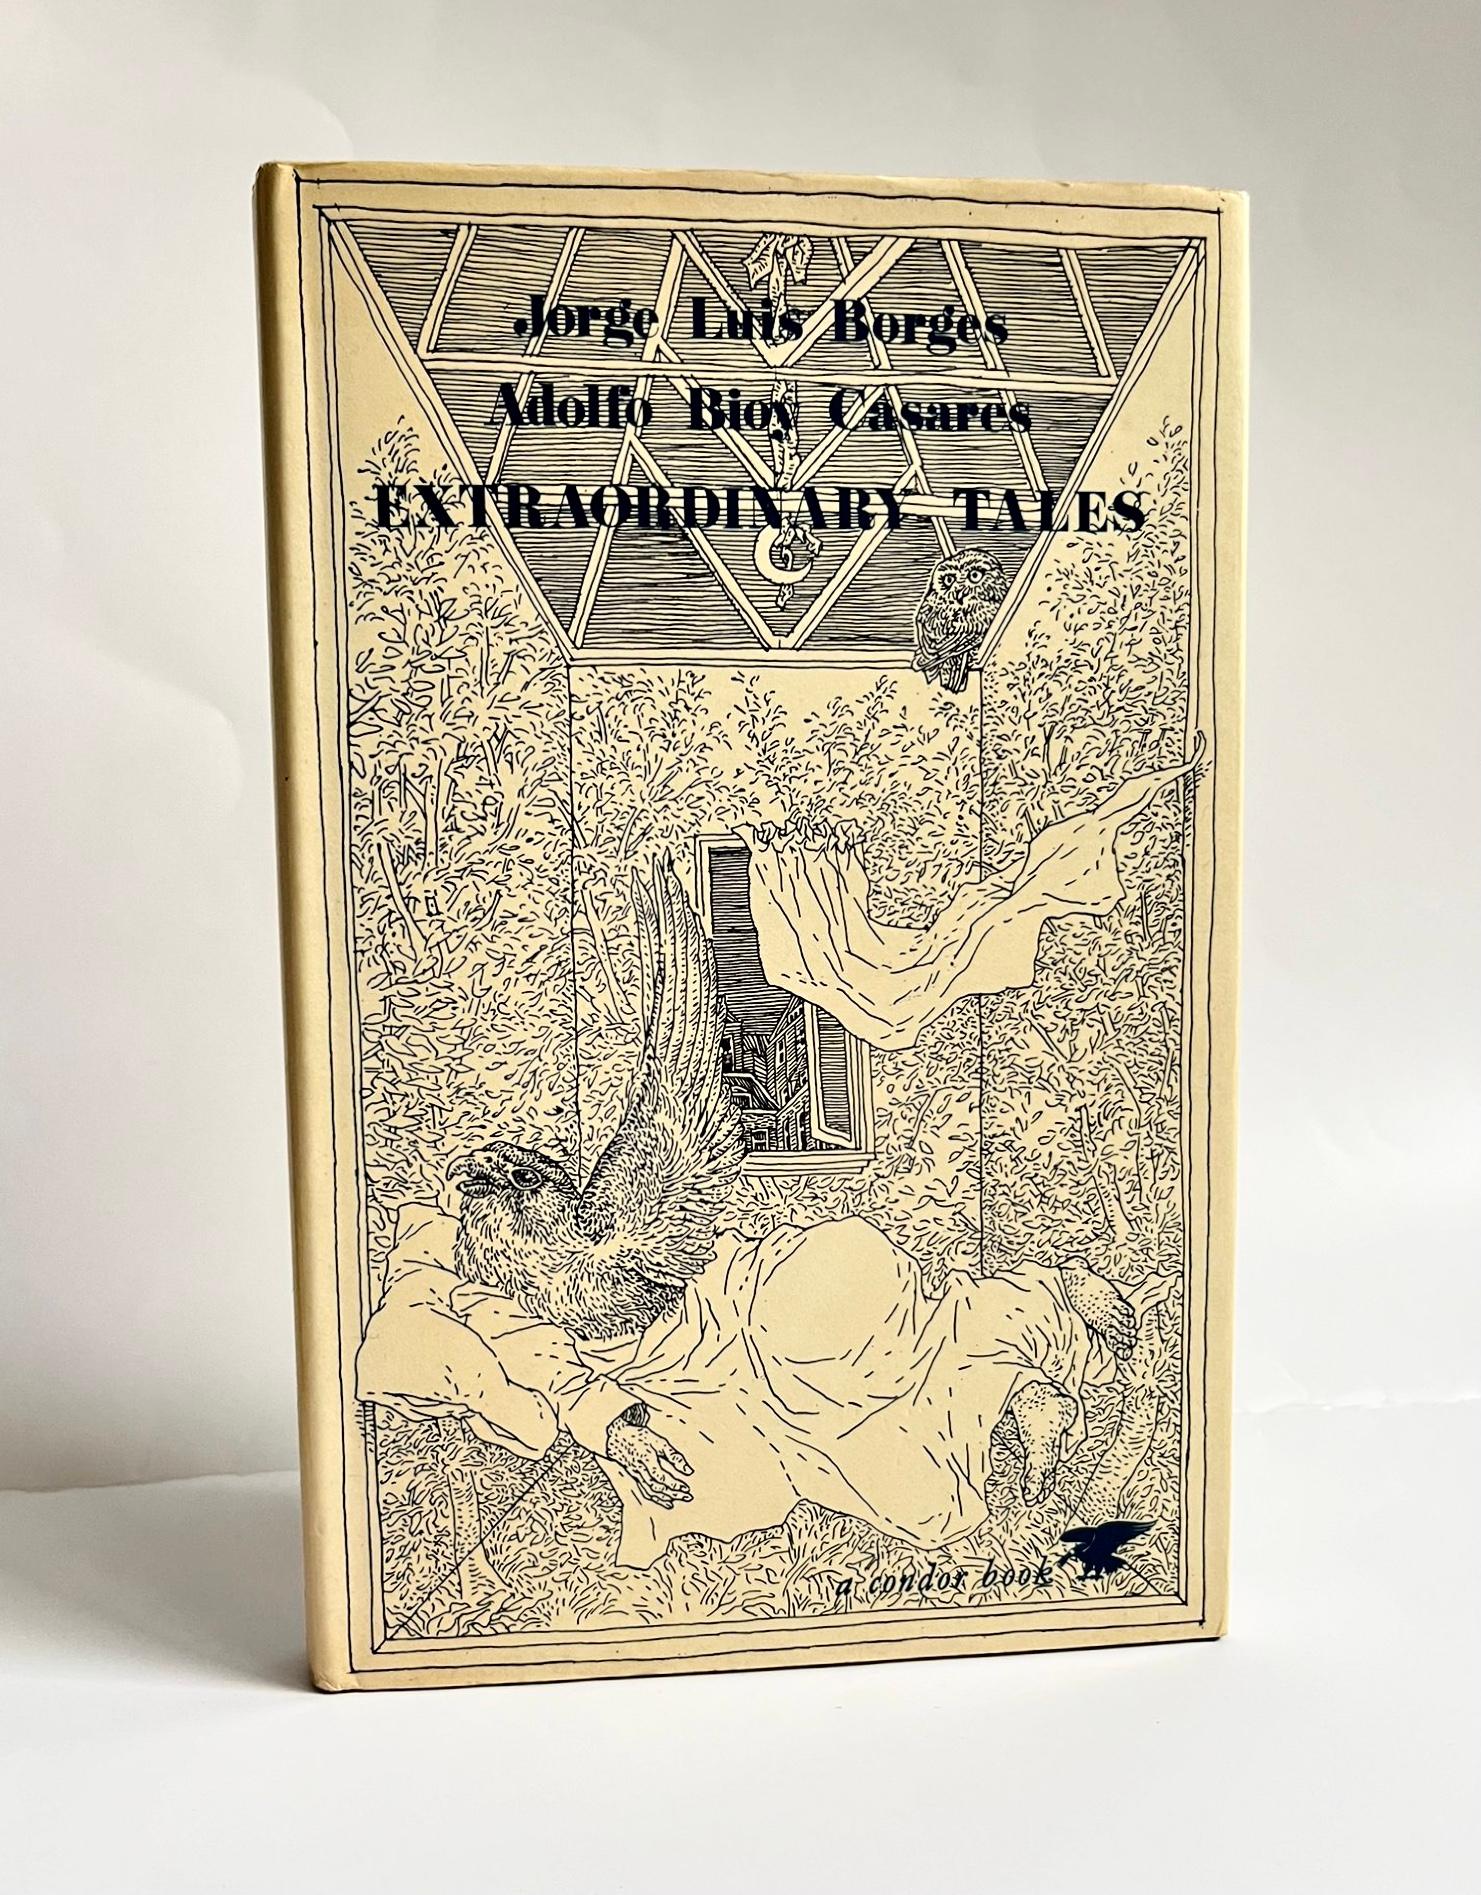 Extraordinary Tales by Jorge Luis Borges & Adolfo Bioy Casares